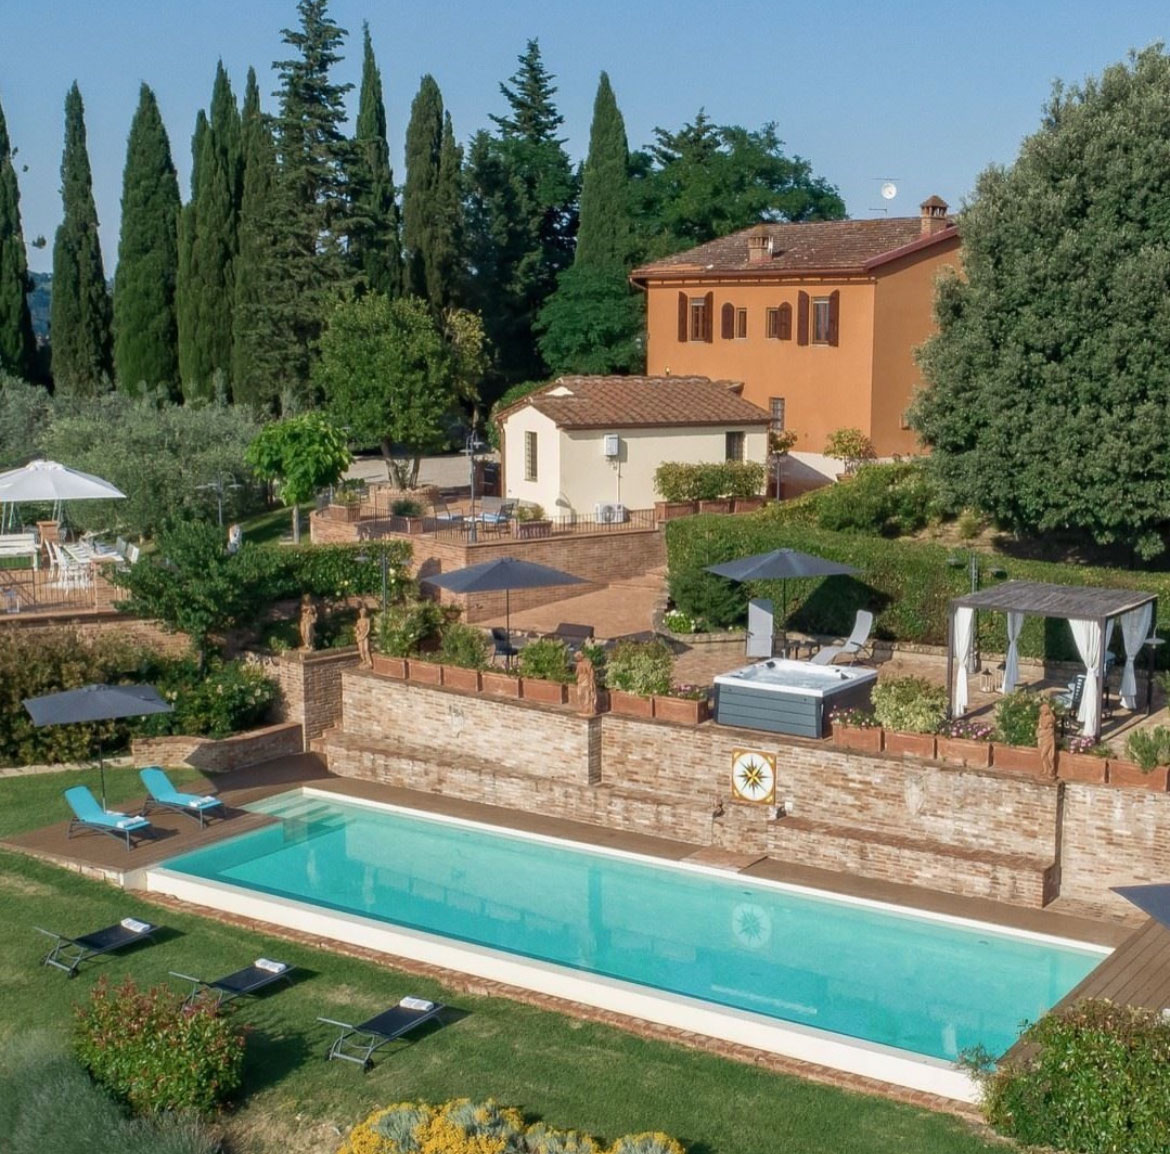 Villa Bellavista gardens and swimming pool; air view - villa rentals by Timeless Tuscany tour operator